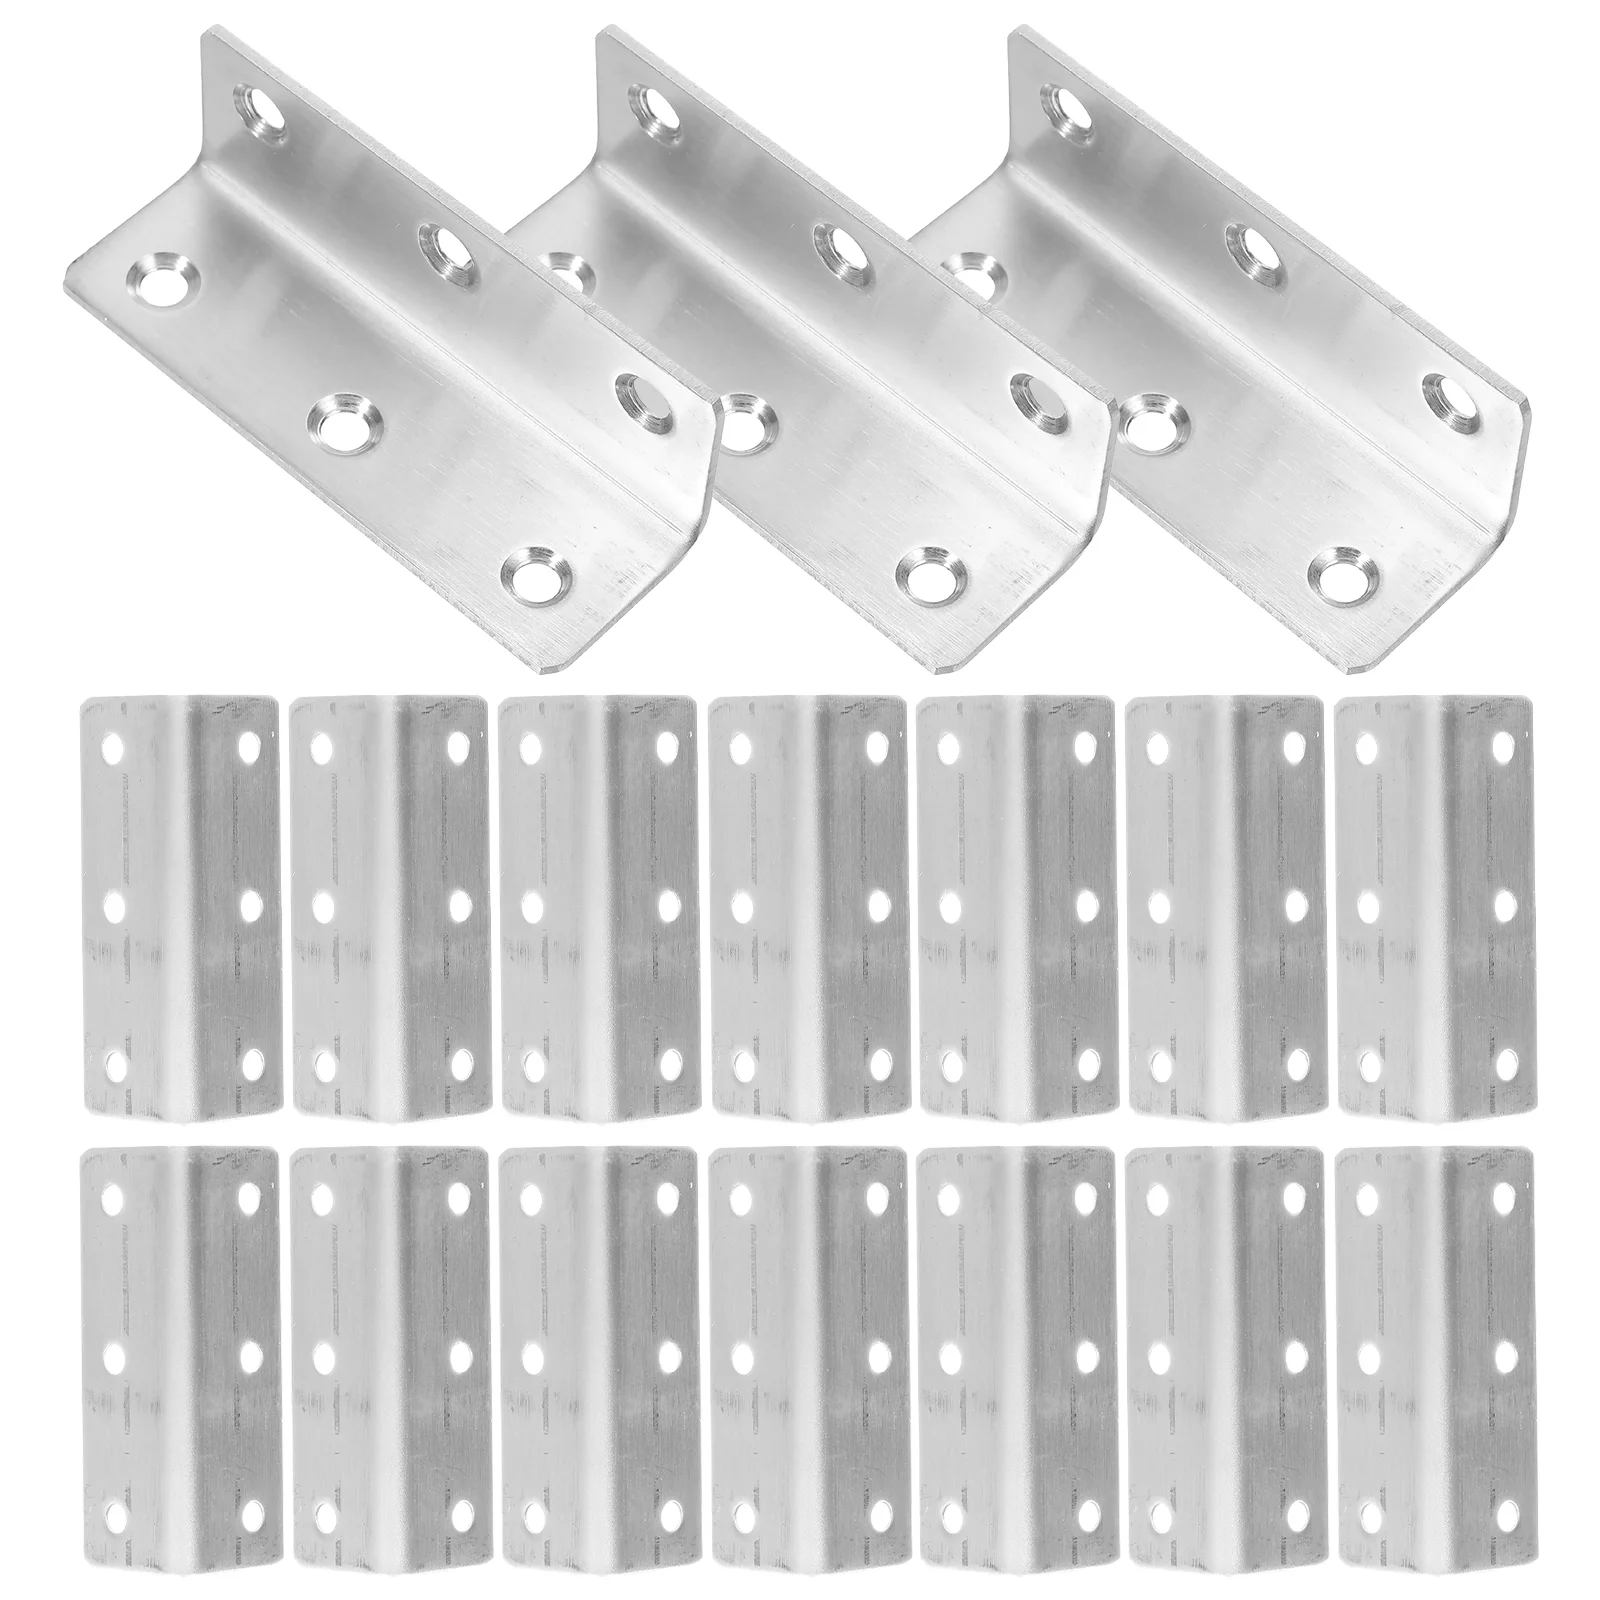 

20pcs Corner Braces Furniture Joints L Shape Brackets Joint Fasteners for Window Cabinet Table